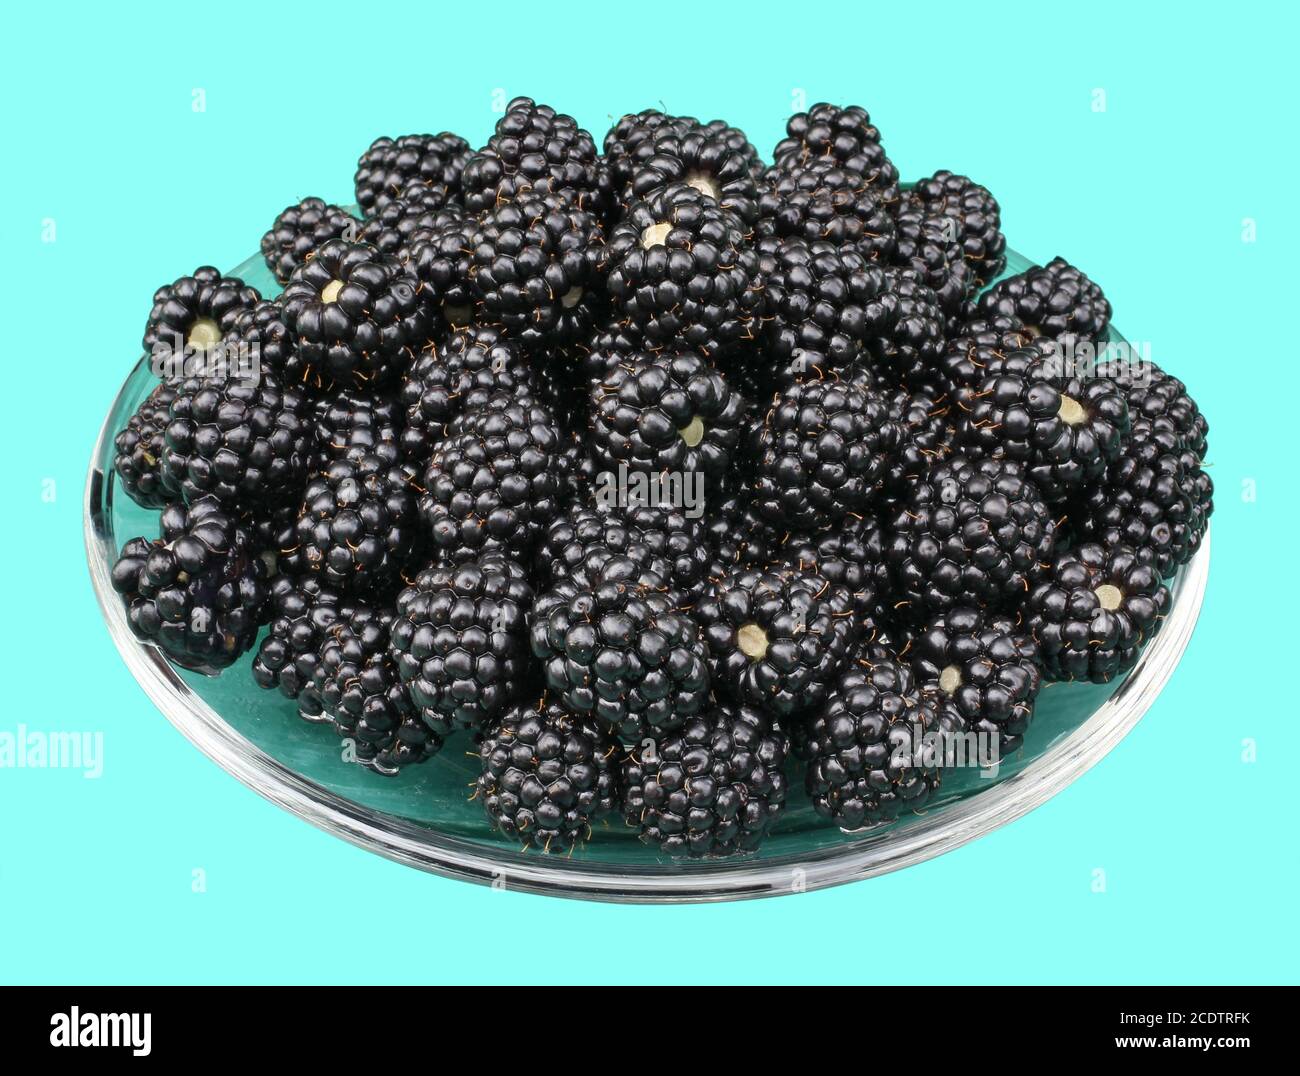 Ripe black berries of sweet garden blackberry  lie on a glass plate. Stock Photo